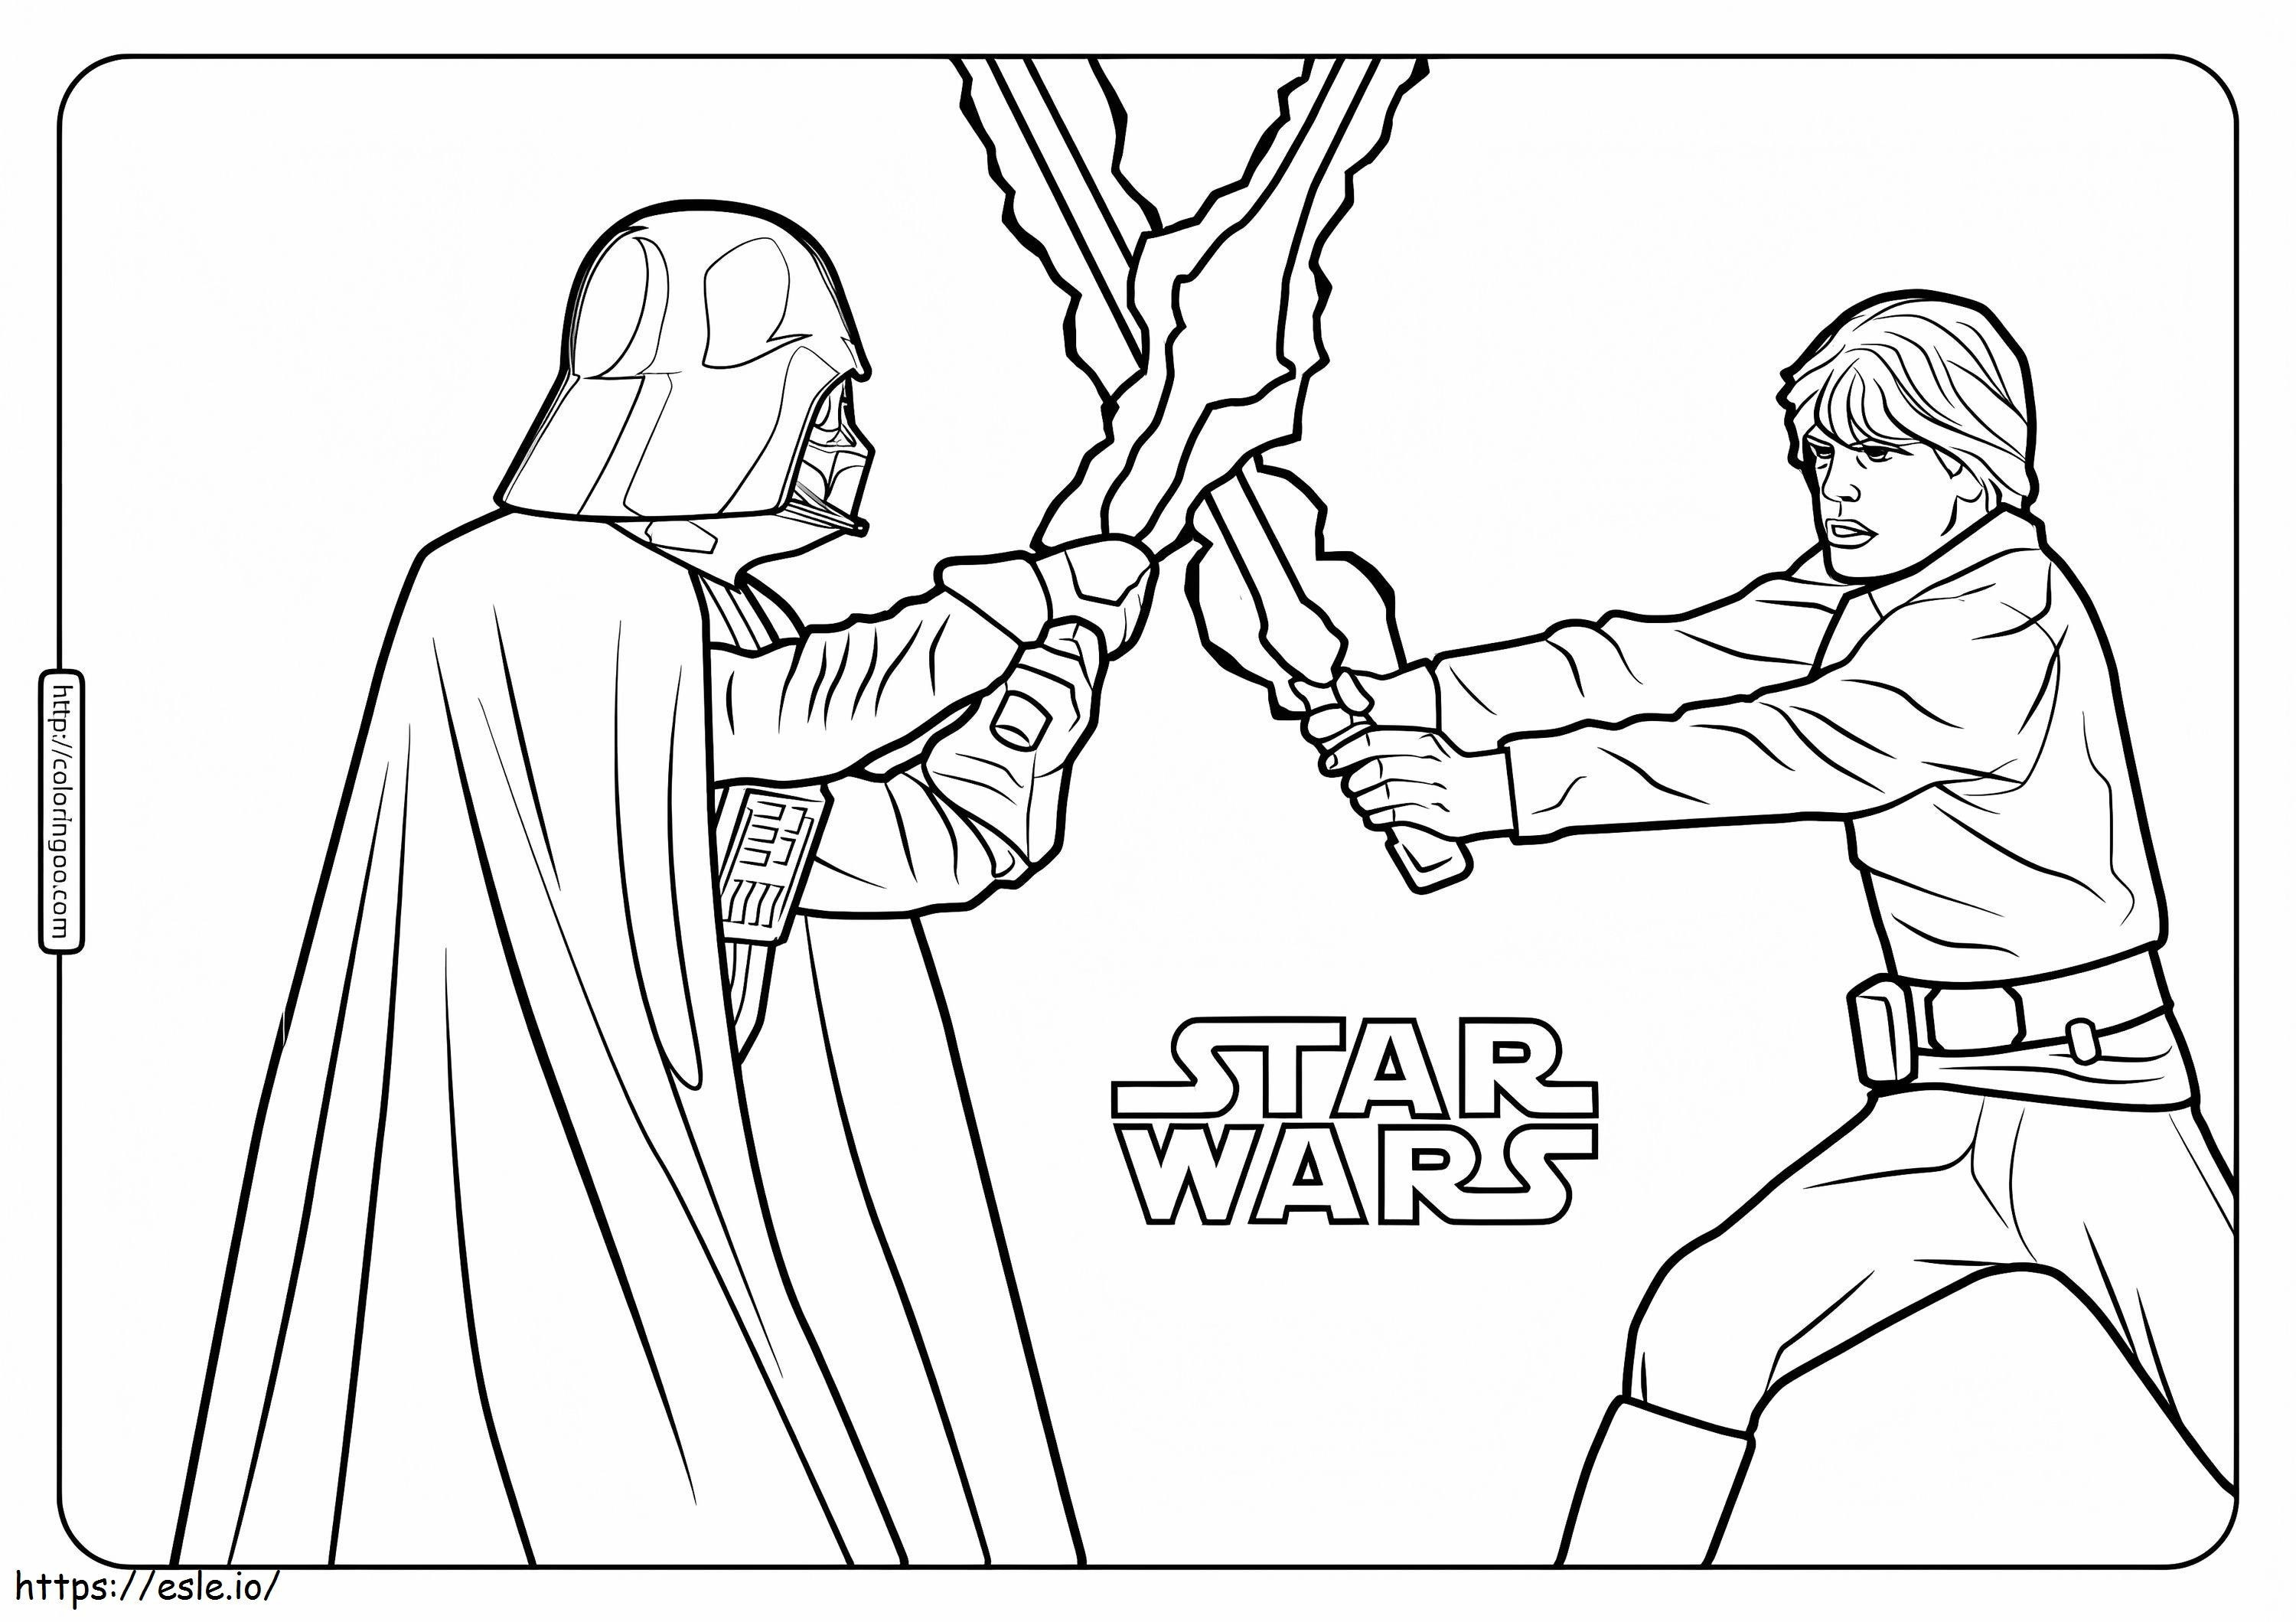 Luke Skywalker And Darth Vader coloring page